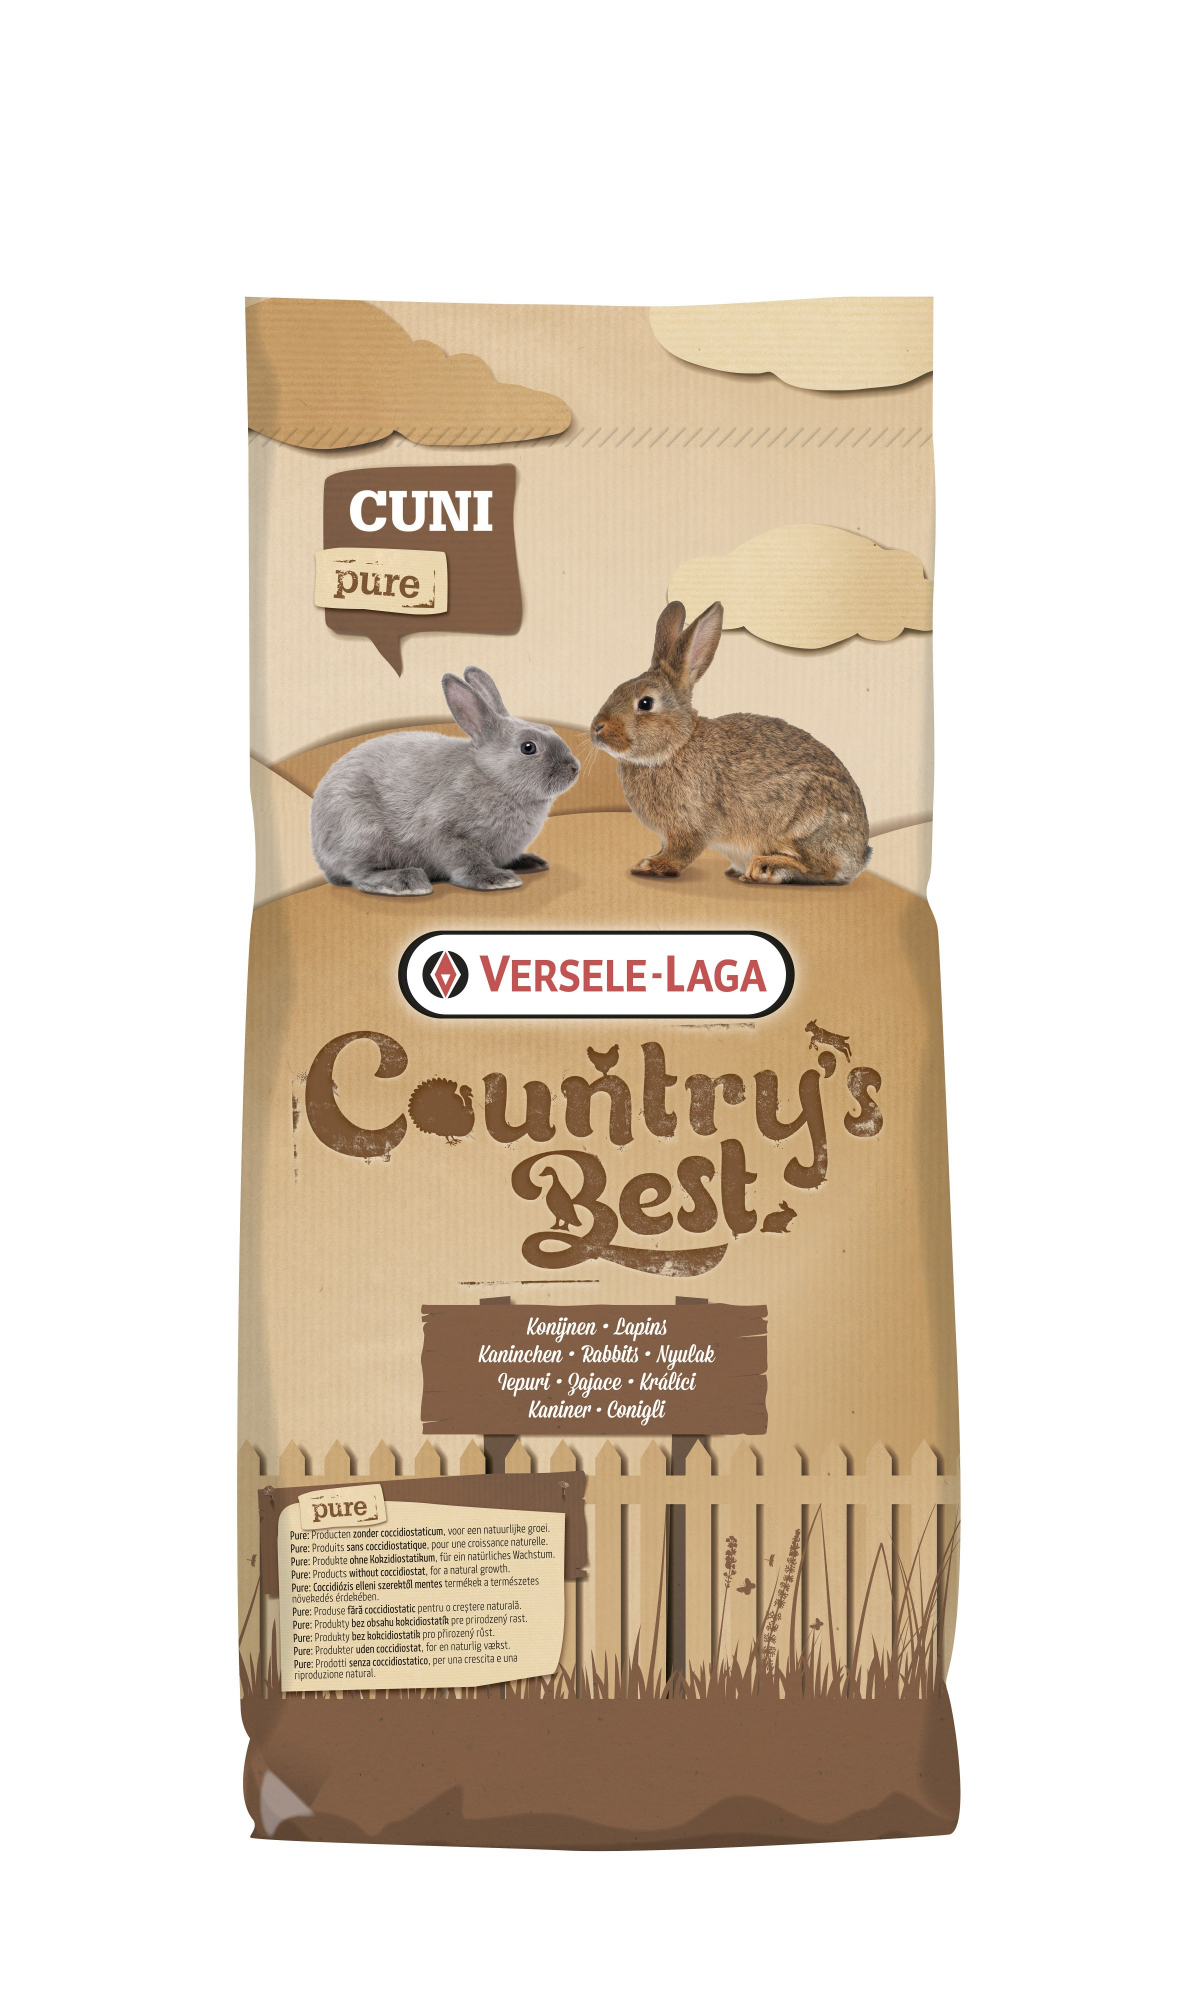 Cuni Top Pure Country's Best Energie Granulat für Kaninchen